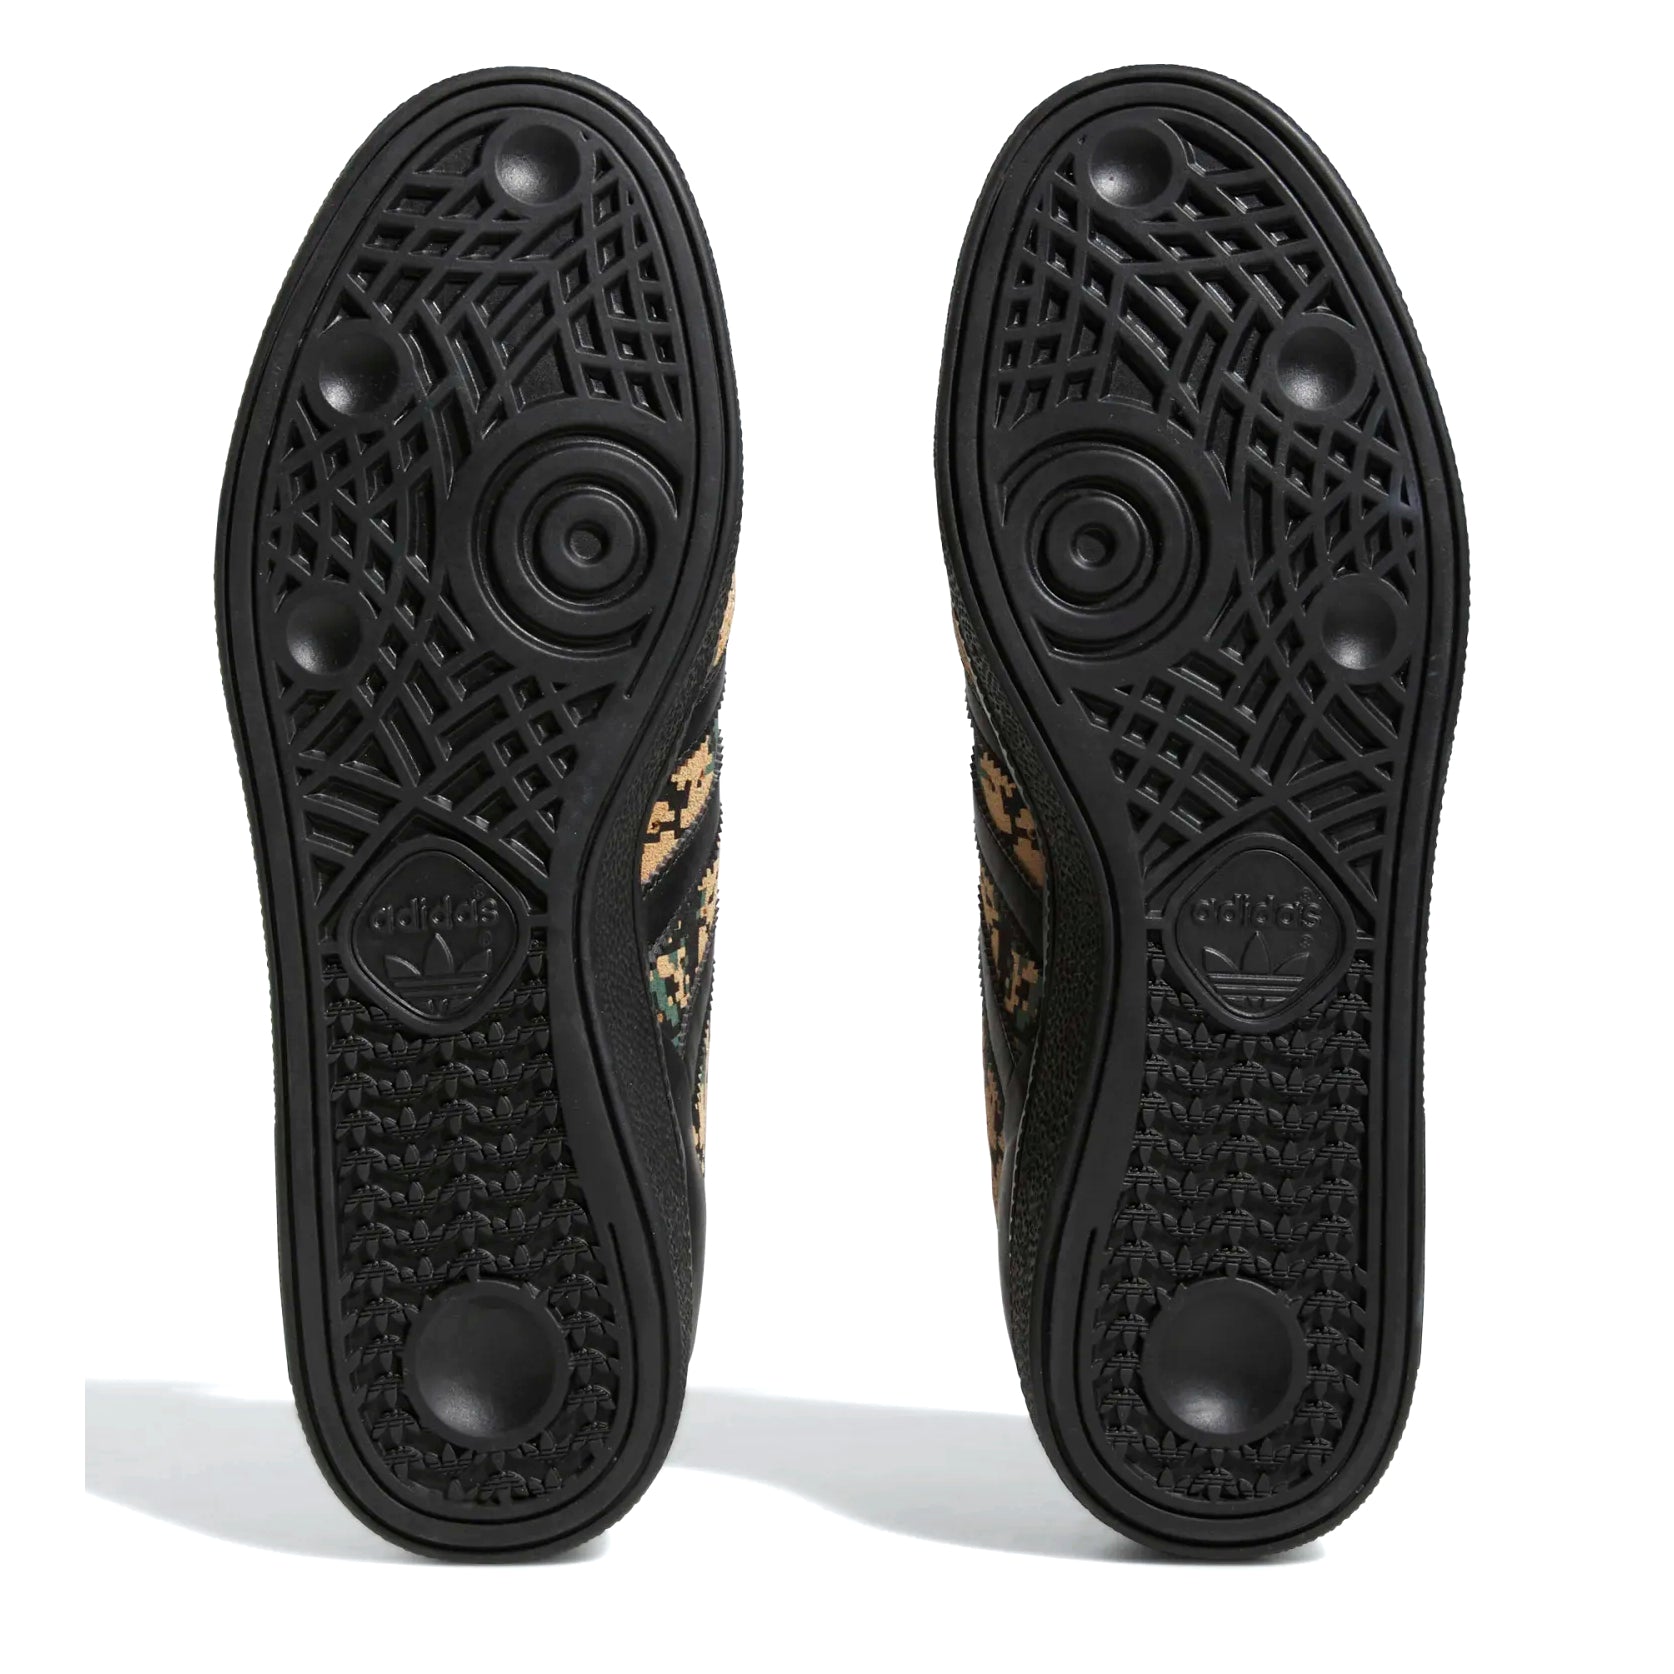 Digi Camo Busenitz Adidas Skateboarding Shoe Bottom